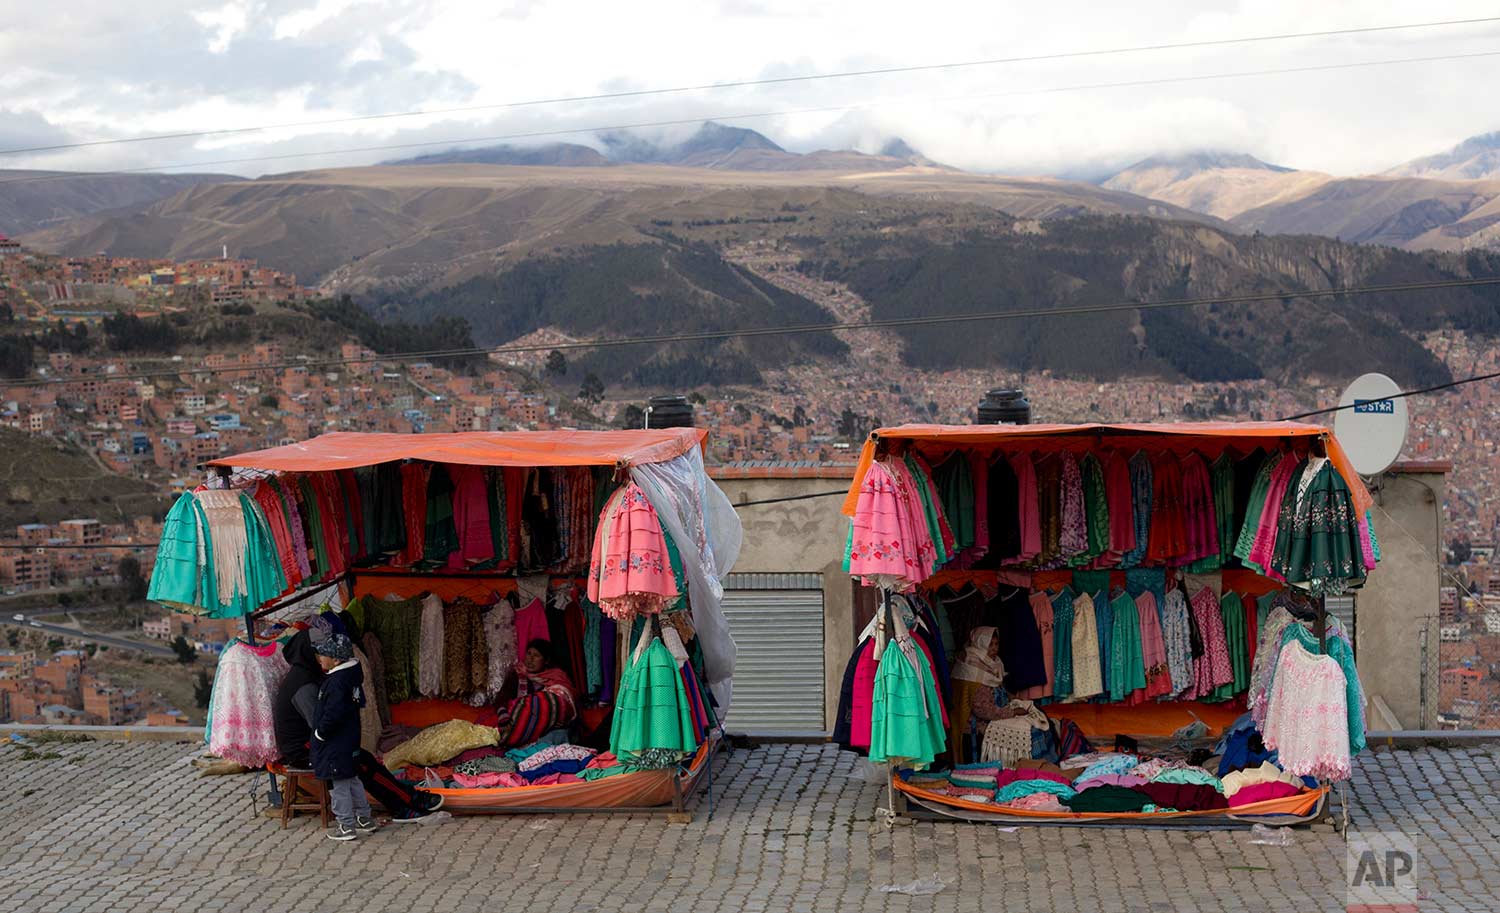  Traditional Andean women's skirts hang for sale at vendors' stores set up along the road between El Alto and La Paz, Bolivia, Thursday, Oct. 12, 2017. (AP Photo/Juan Karita) 